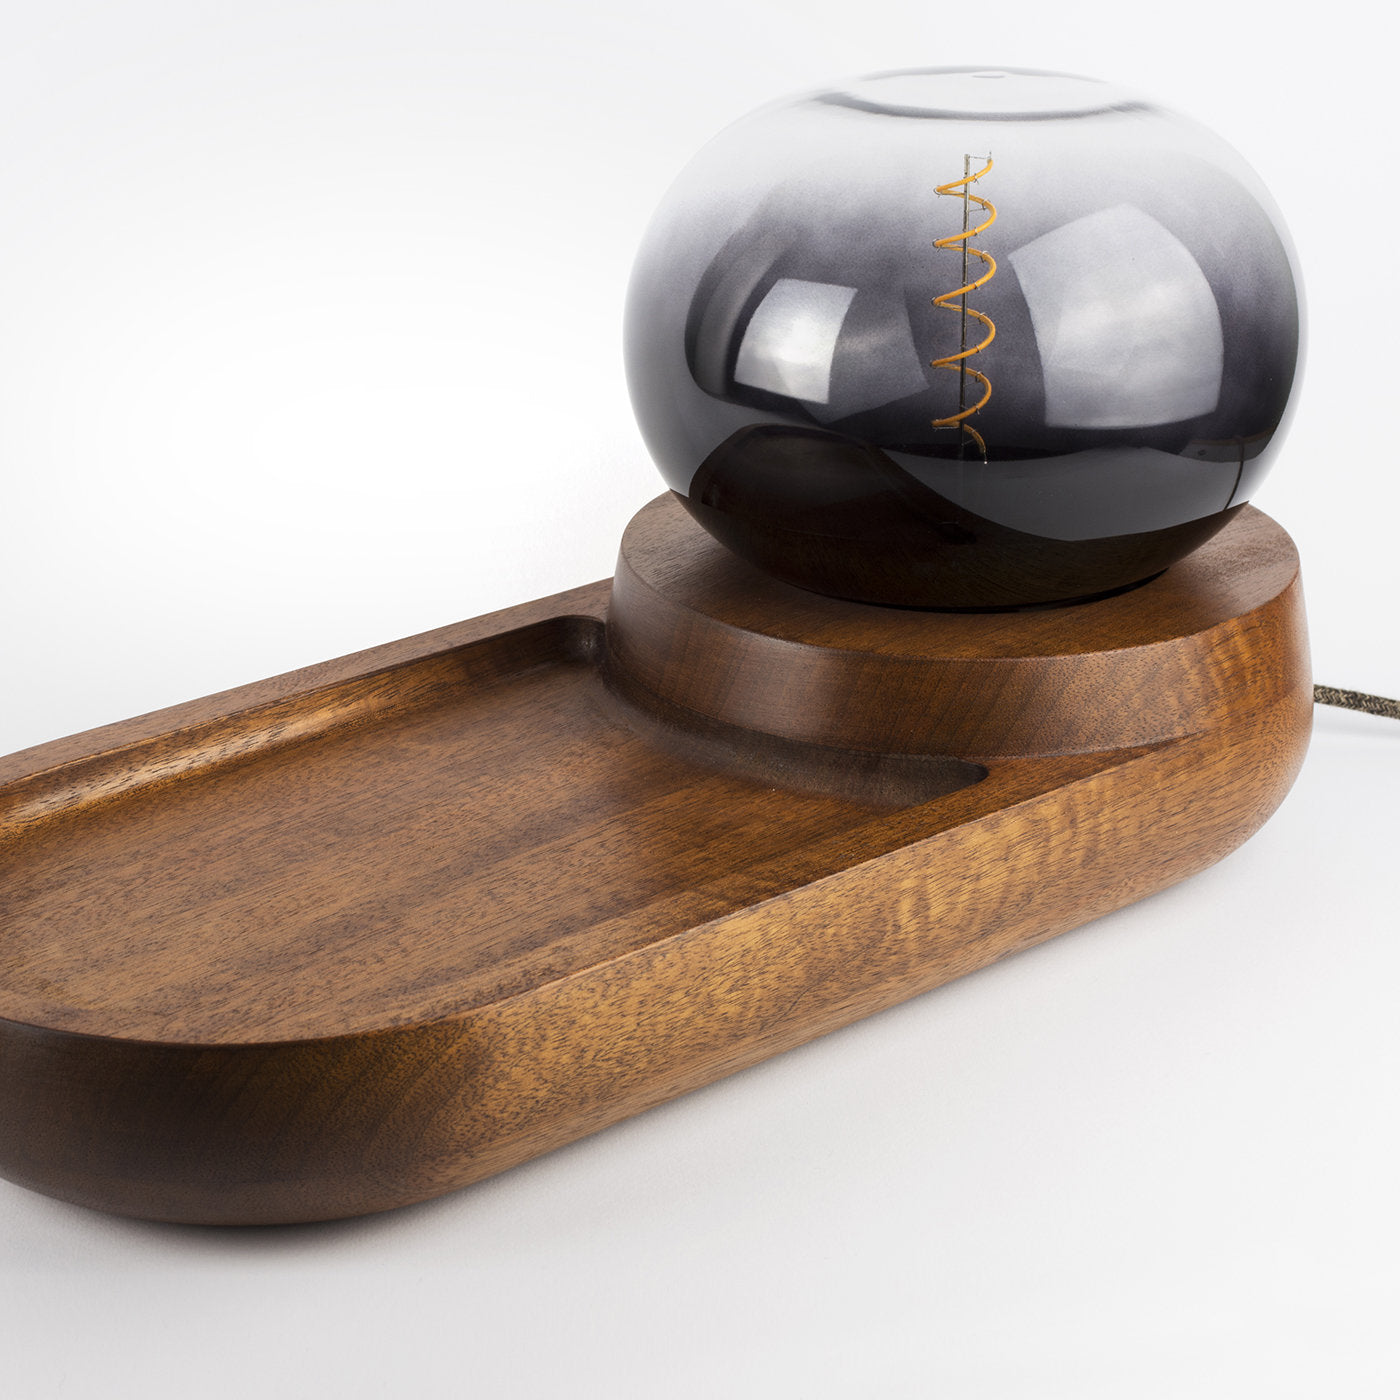 Vessel Black Table Lamp by Alalda Design - Alternative view 1